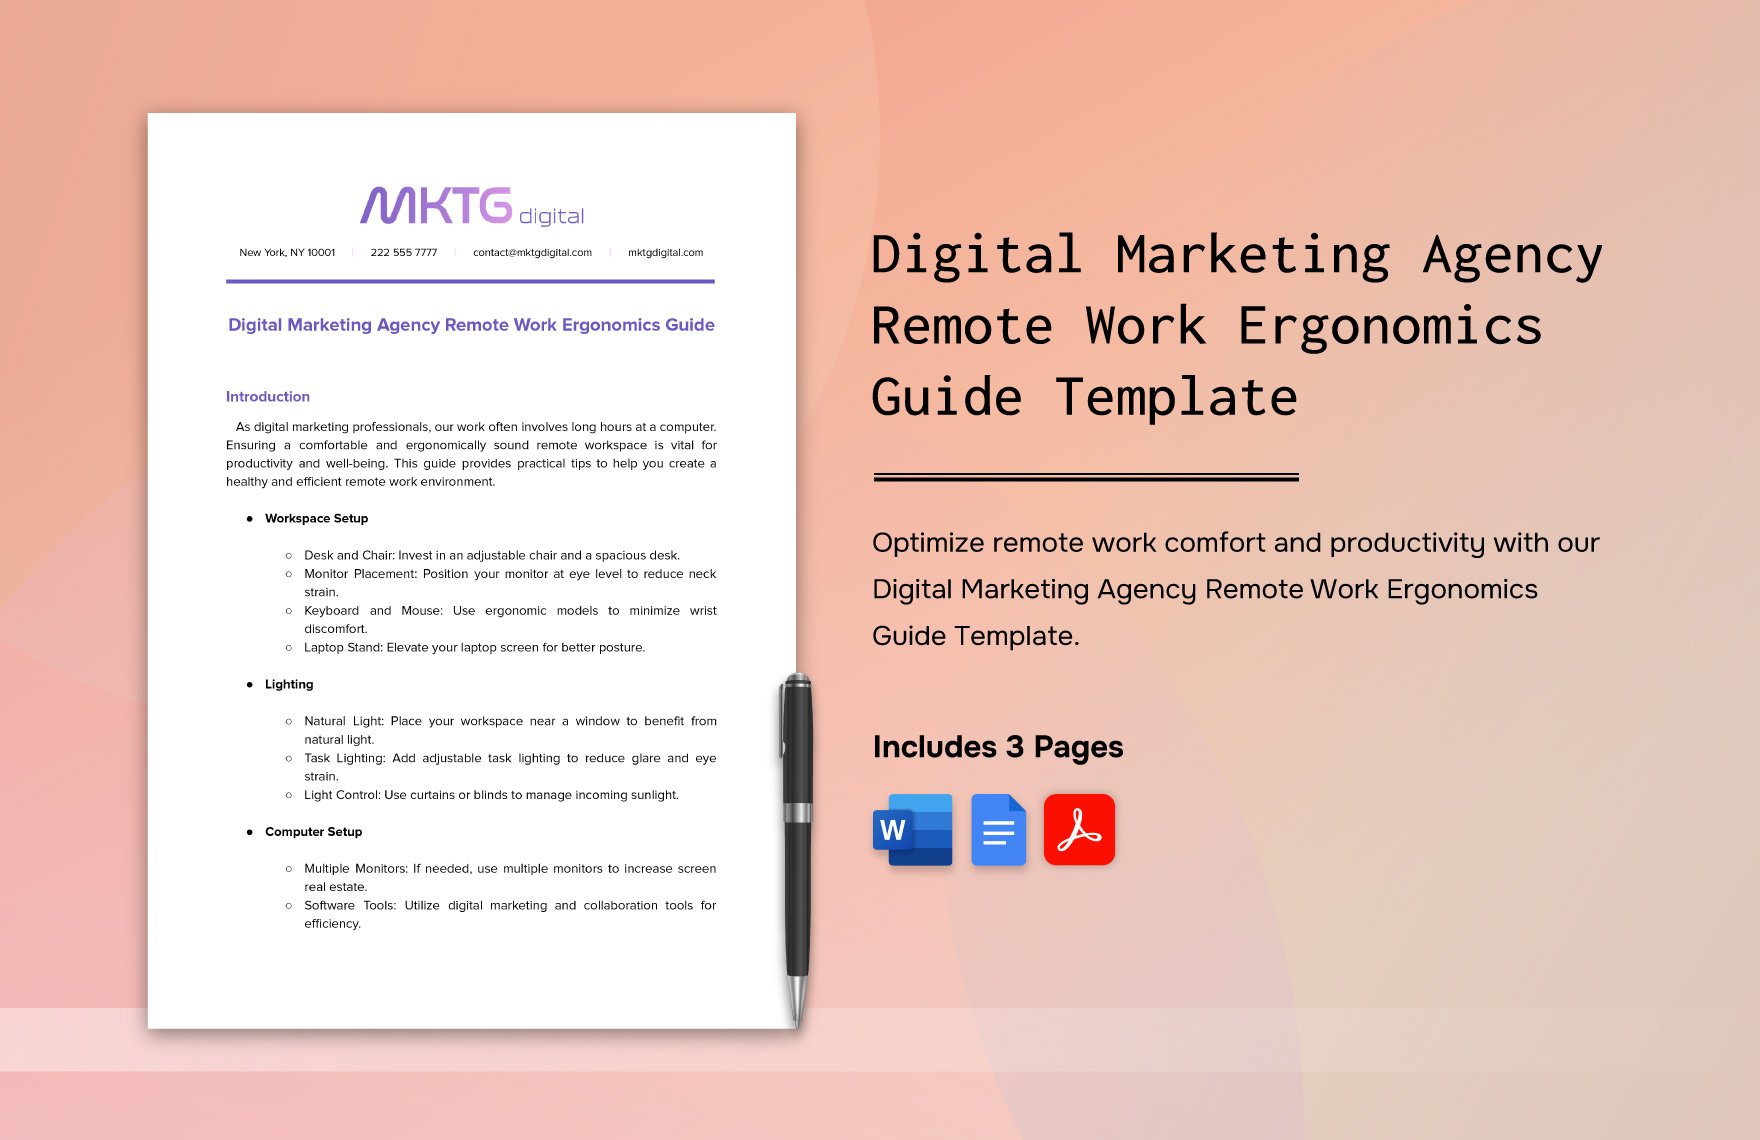 Digital Marketing Agency Remote Work Ergonomics Guide Template